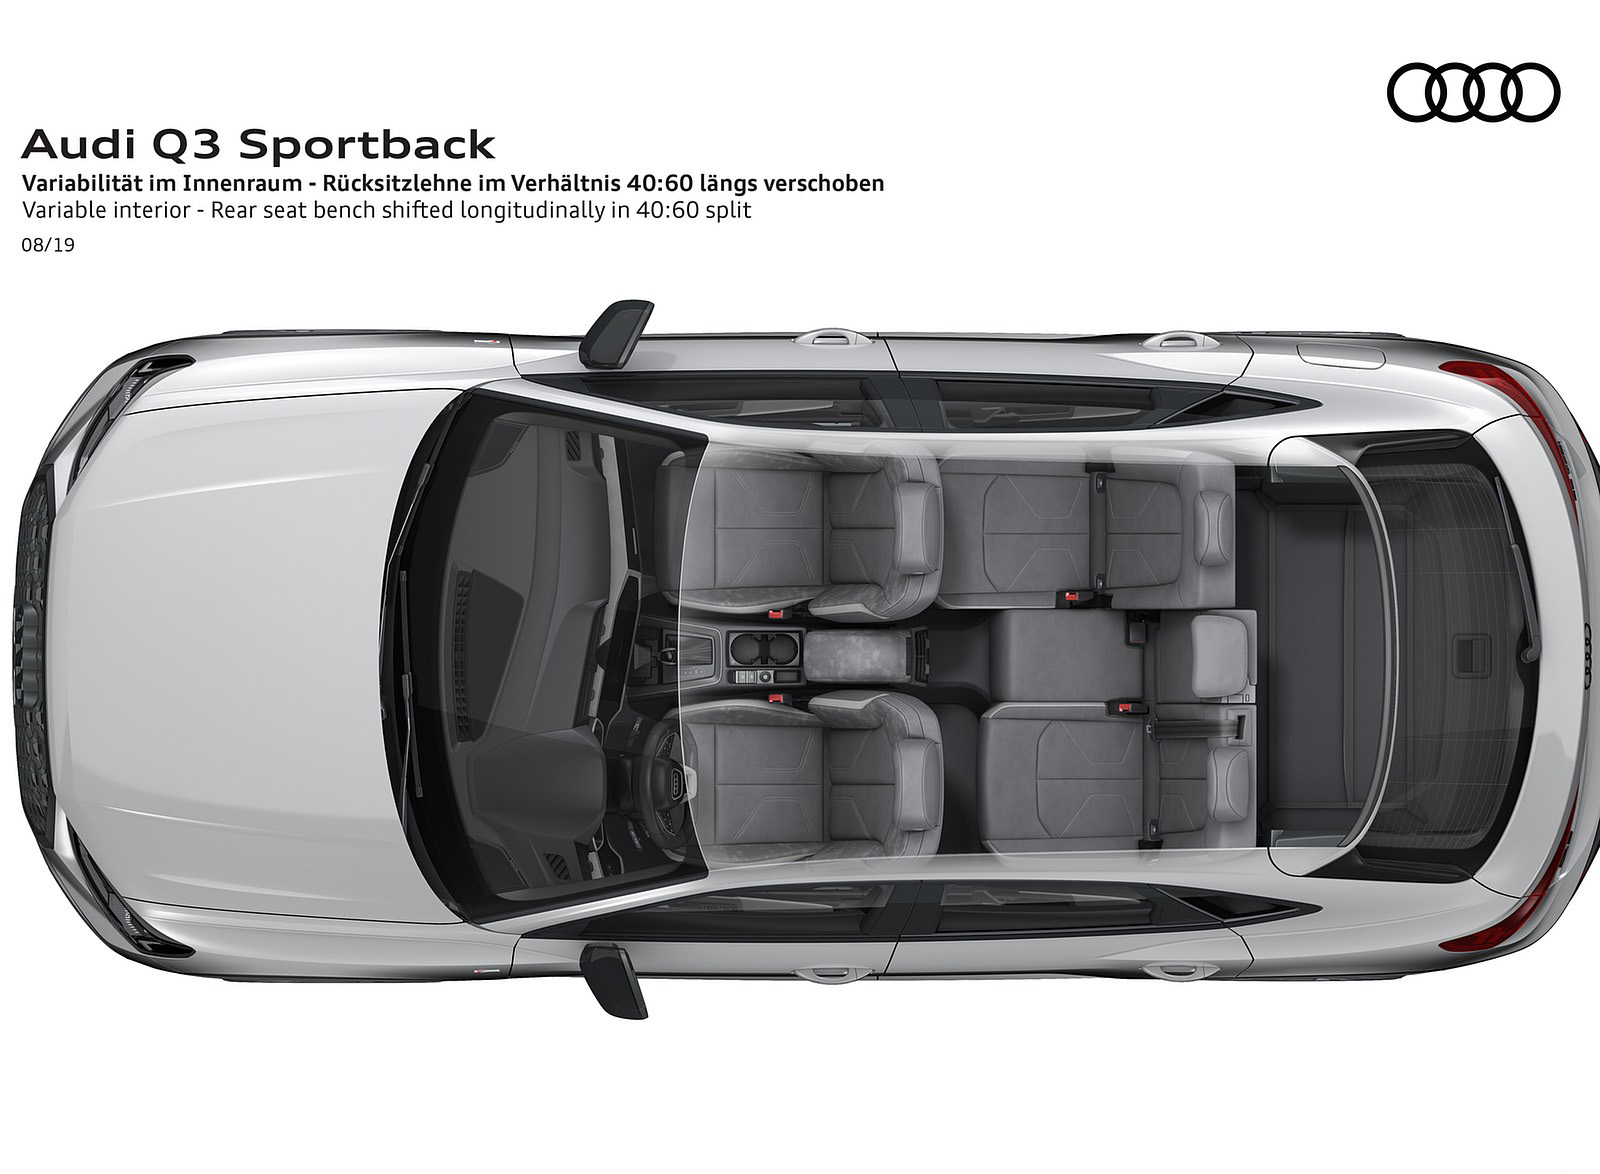 2020 Audi Q3 Sportback Variable interior Rear seat bench shifted longitudinally Wallpapers #262 of 285